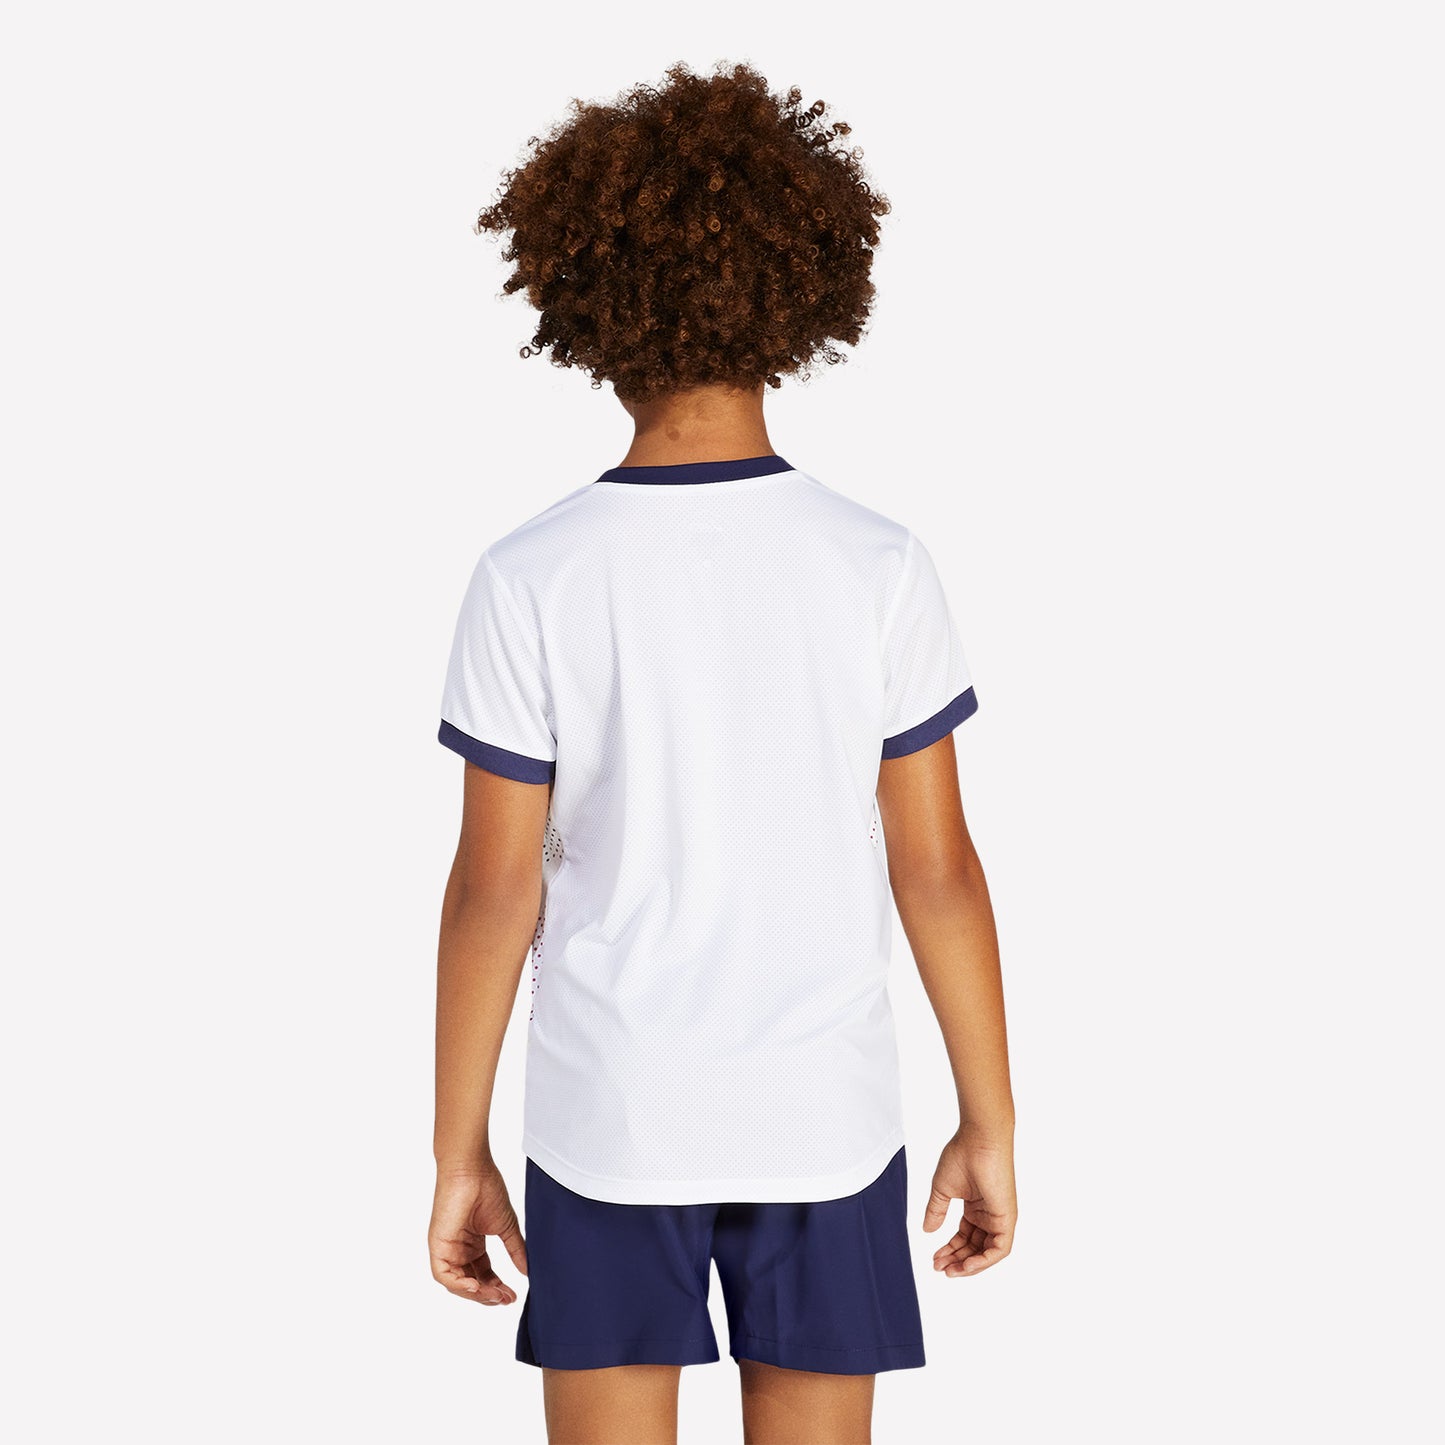 ASICS Match Boys' Graphic Tennis Shirt White (2)